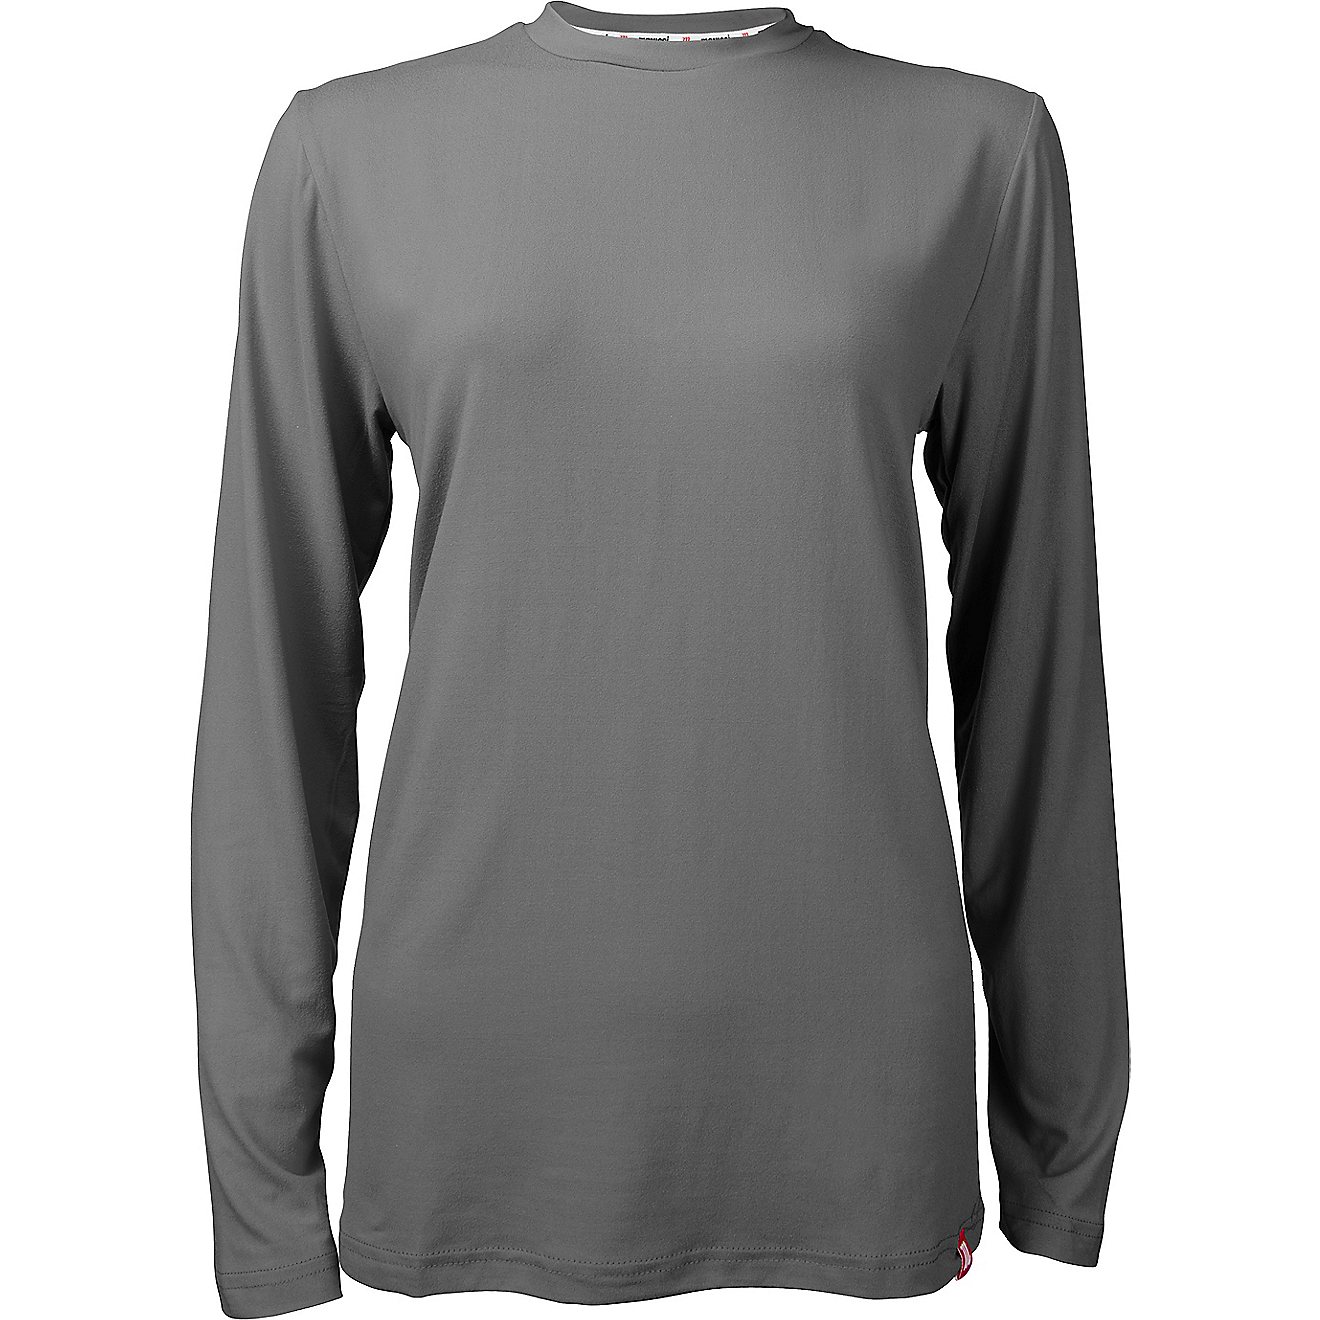 Marucci Women's Long Sleeve Performance Softball T-shirt                                                                         - view number 1